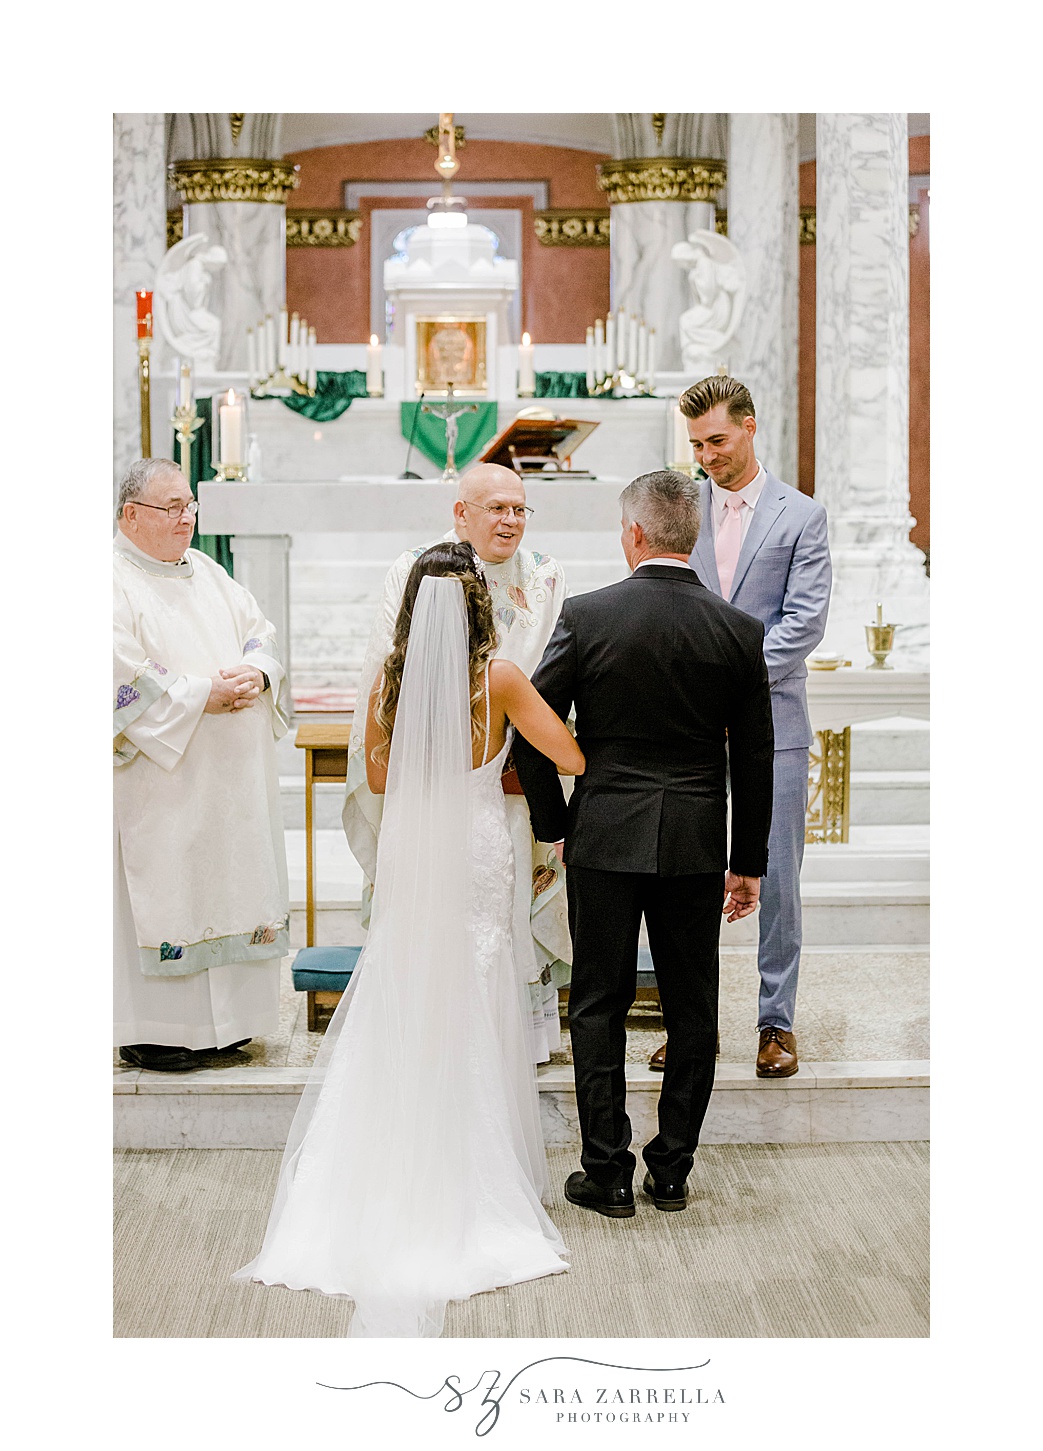 dad walks bride to alter during Catholic wedding day in Newport RI